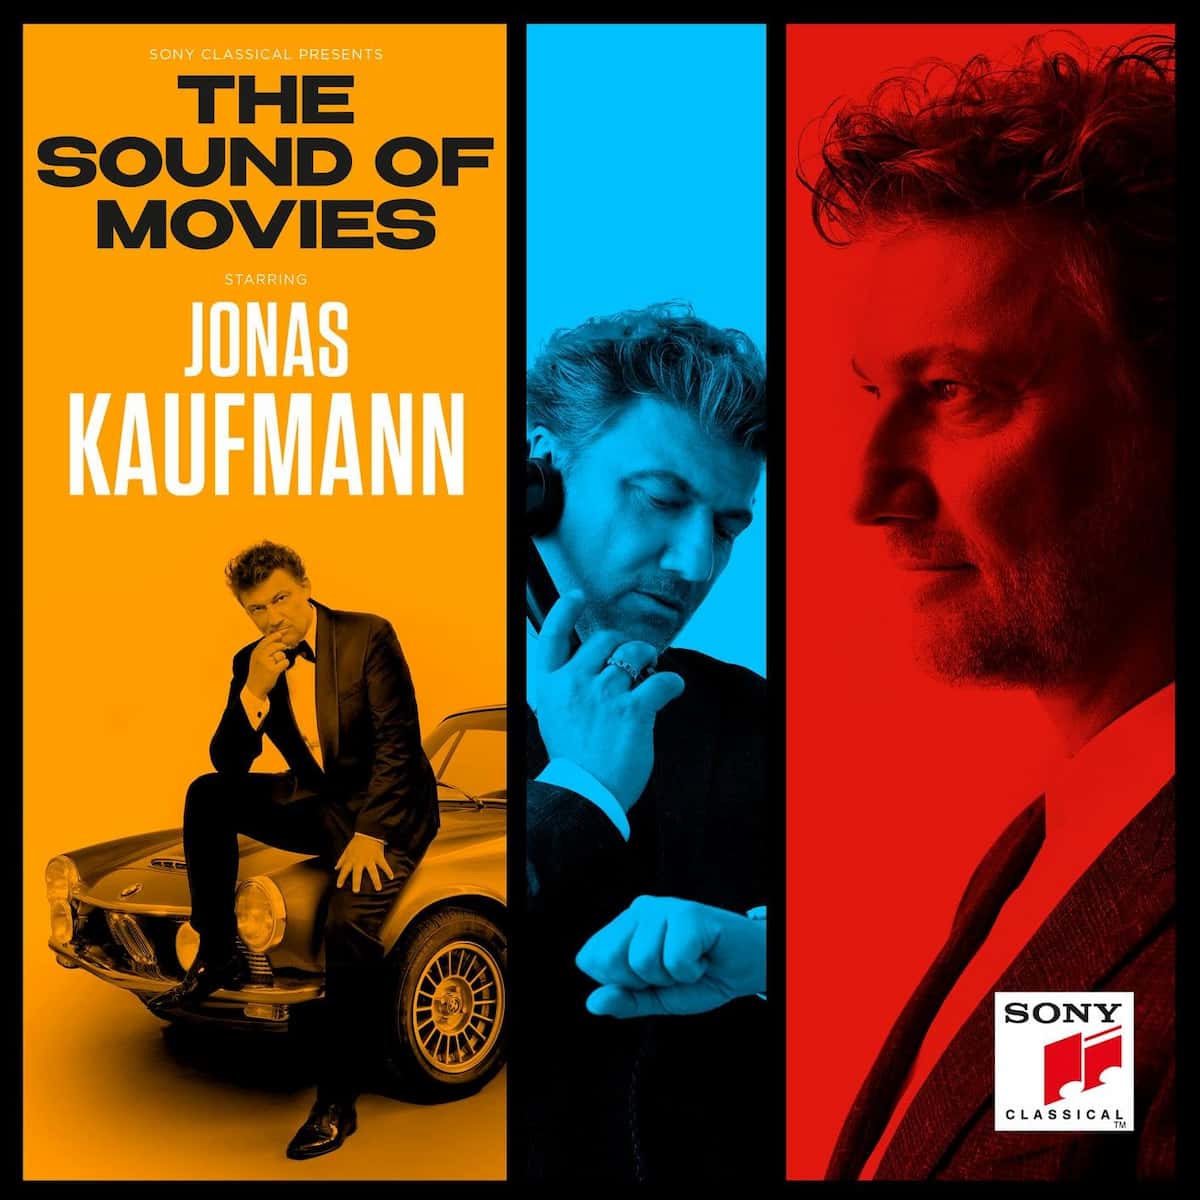 Jonas Kaufmann Klassik-CD “The Sound of Movies” veröffentlicht